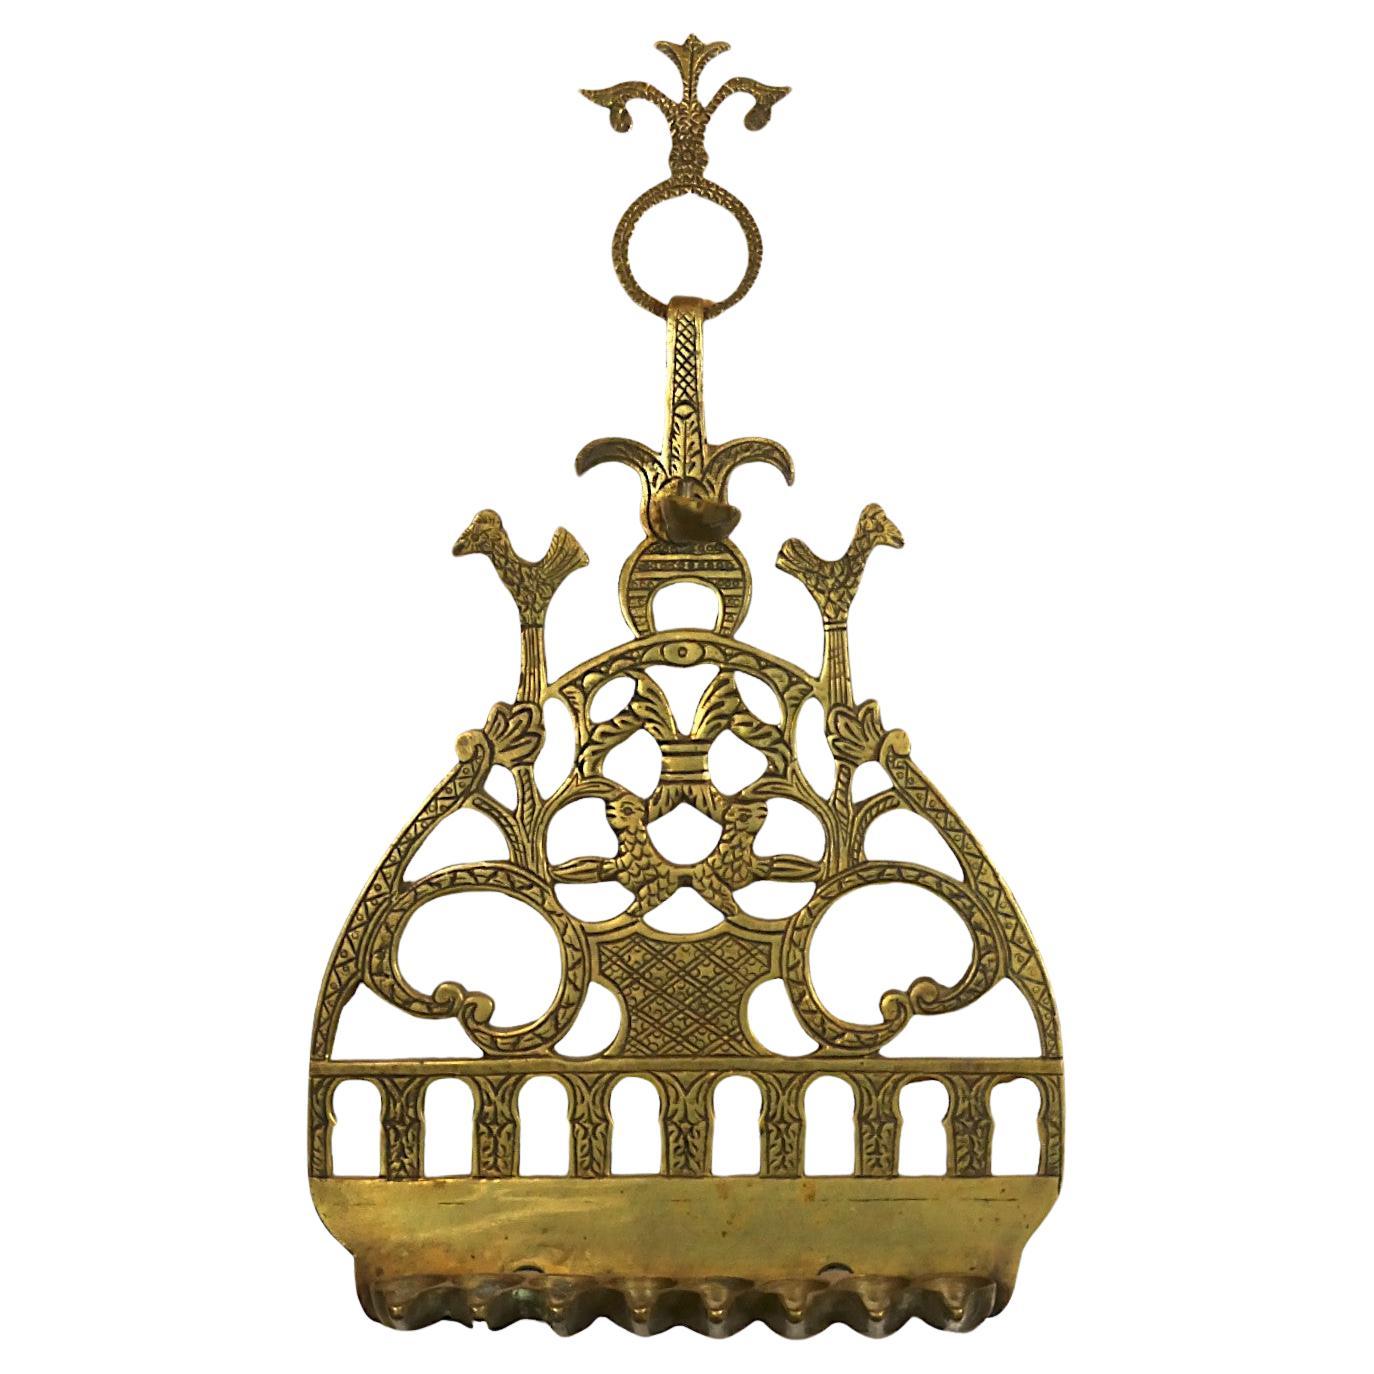 Lampe de Hanoukka marocaine en laiton, fin du 19e siècle